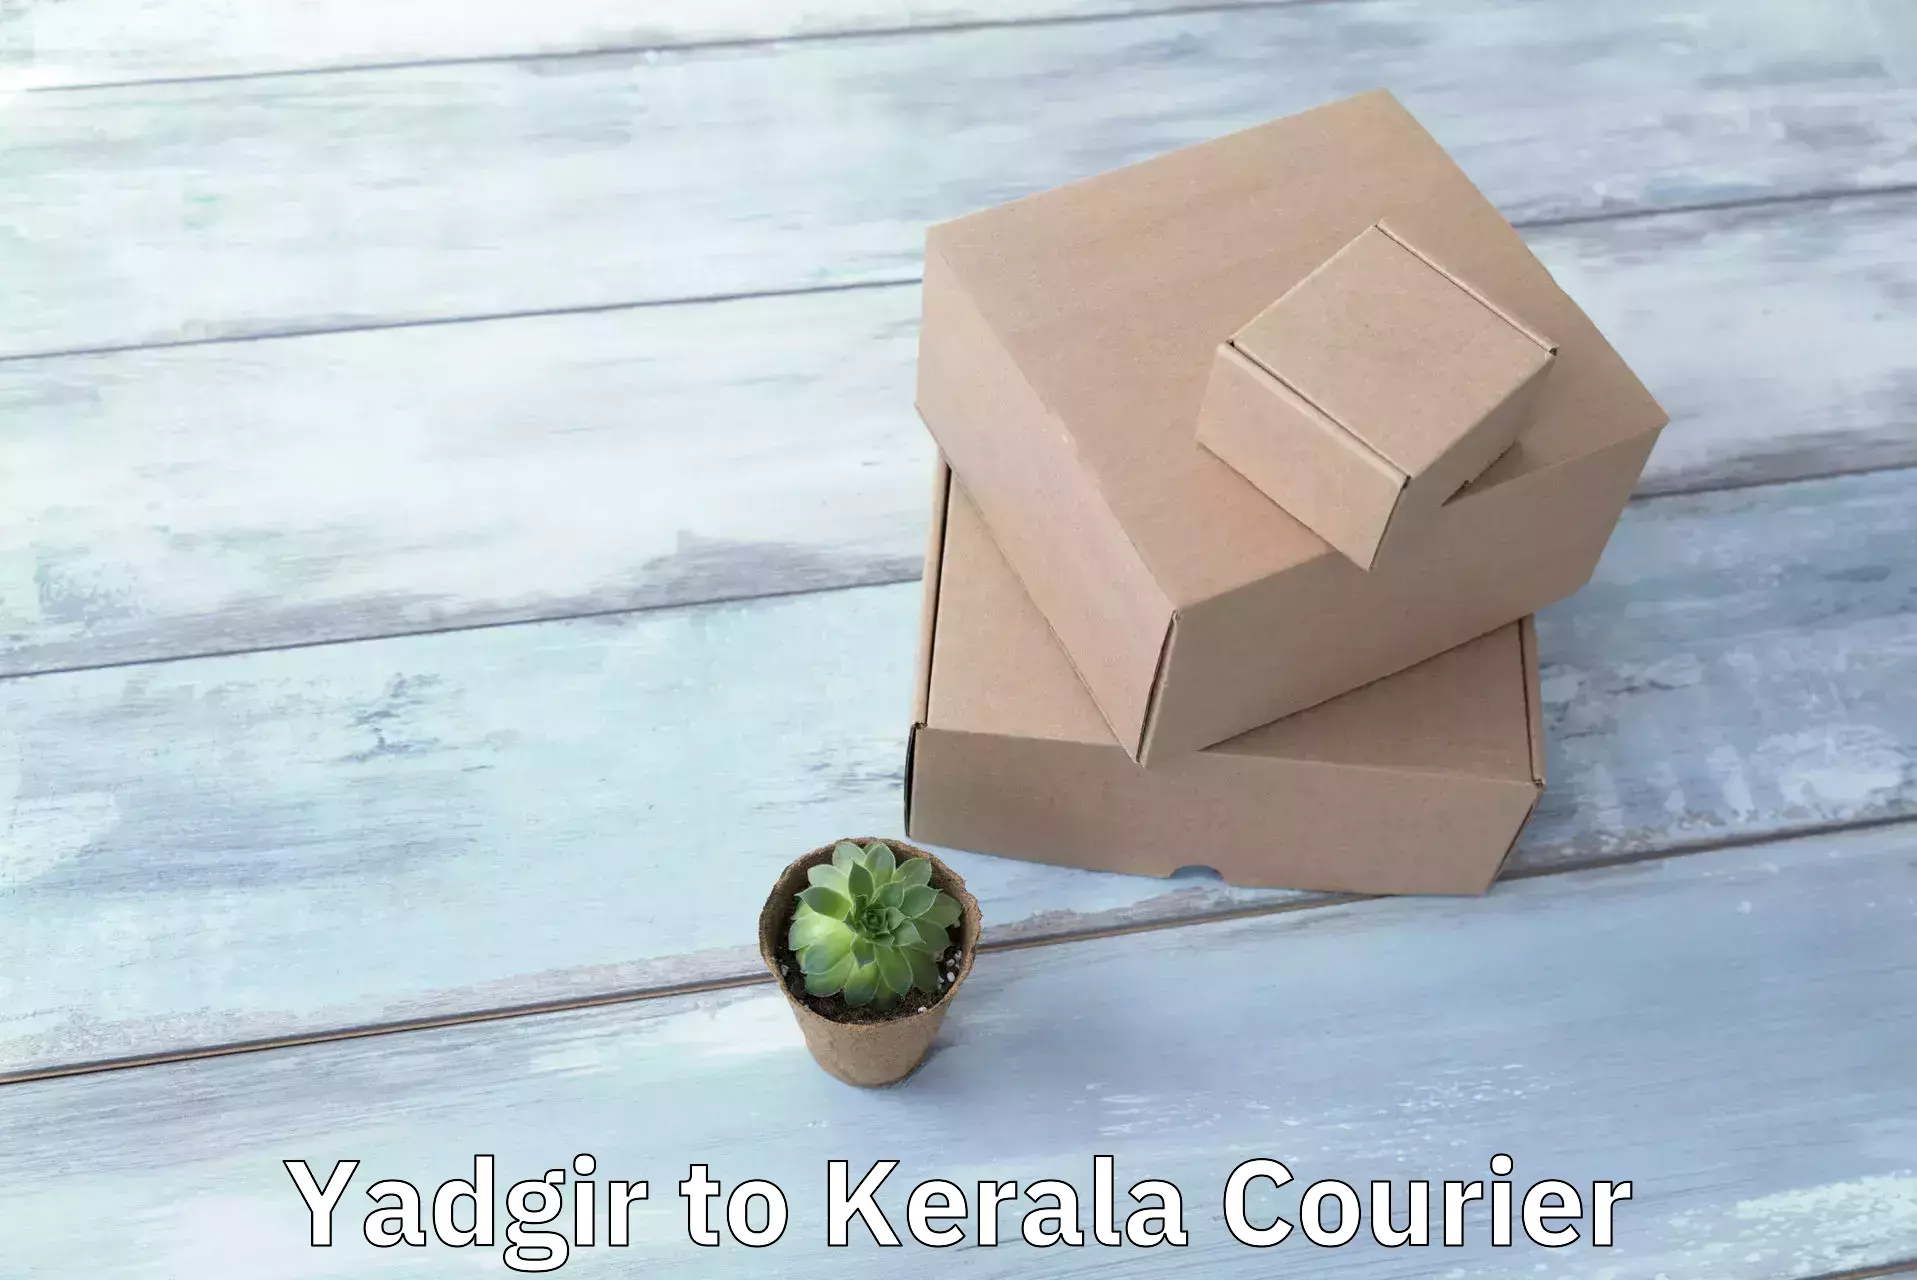 Cash on delivery service Yadgir to Kozhencherry